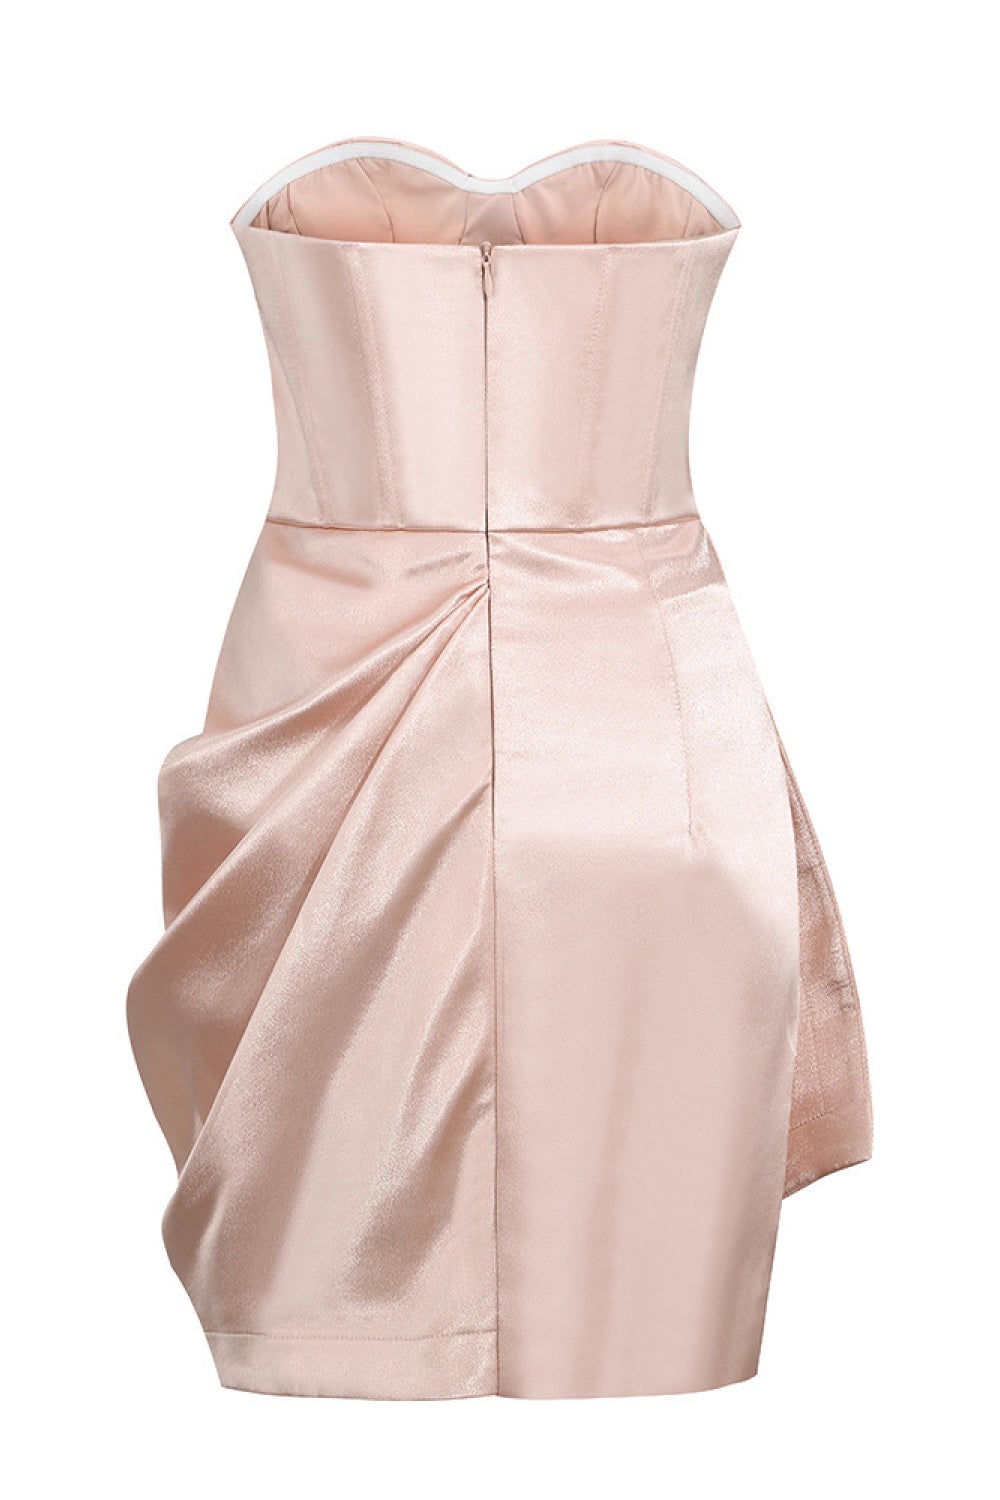 So Fabulous Hem Dress - Ballerina Pink